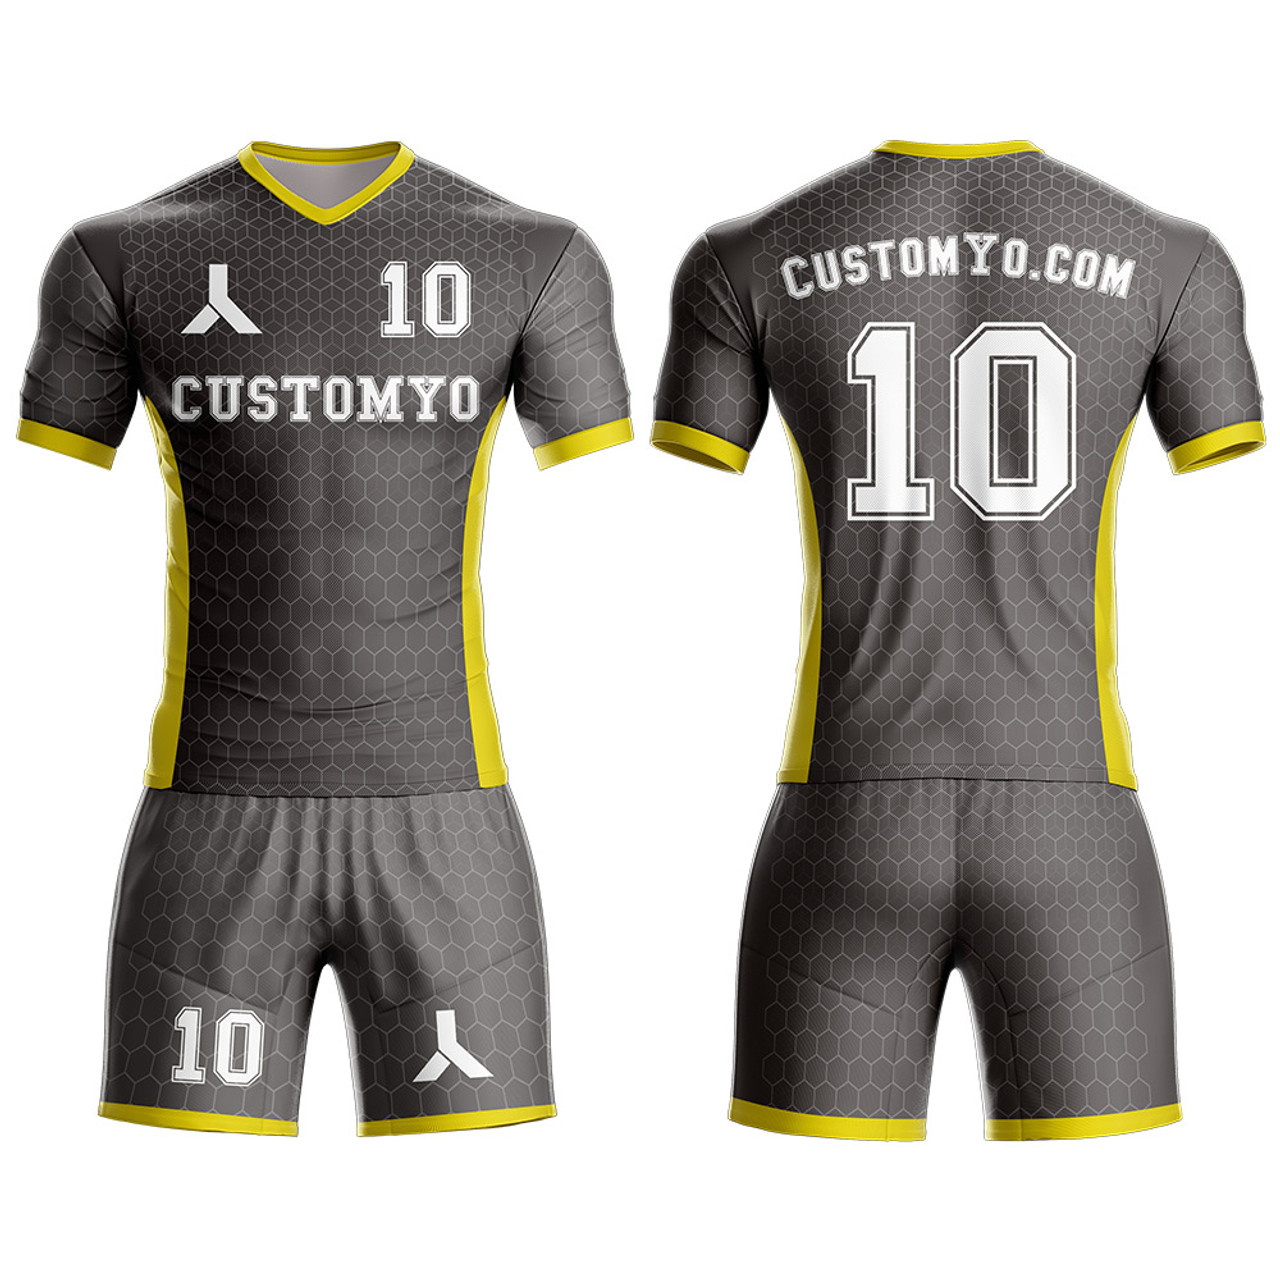 Custom Soccer Uniforms for Kids, Create Your Own